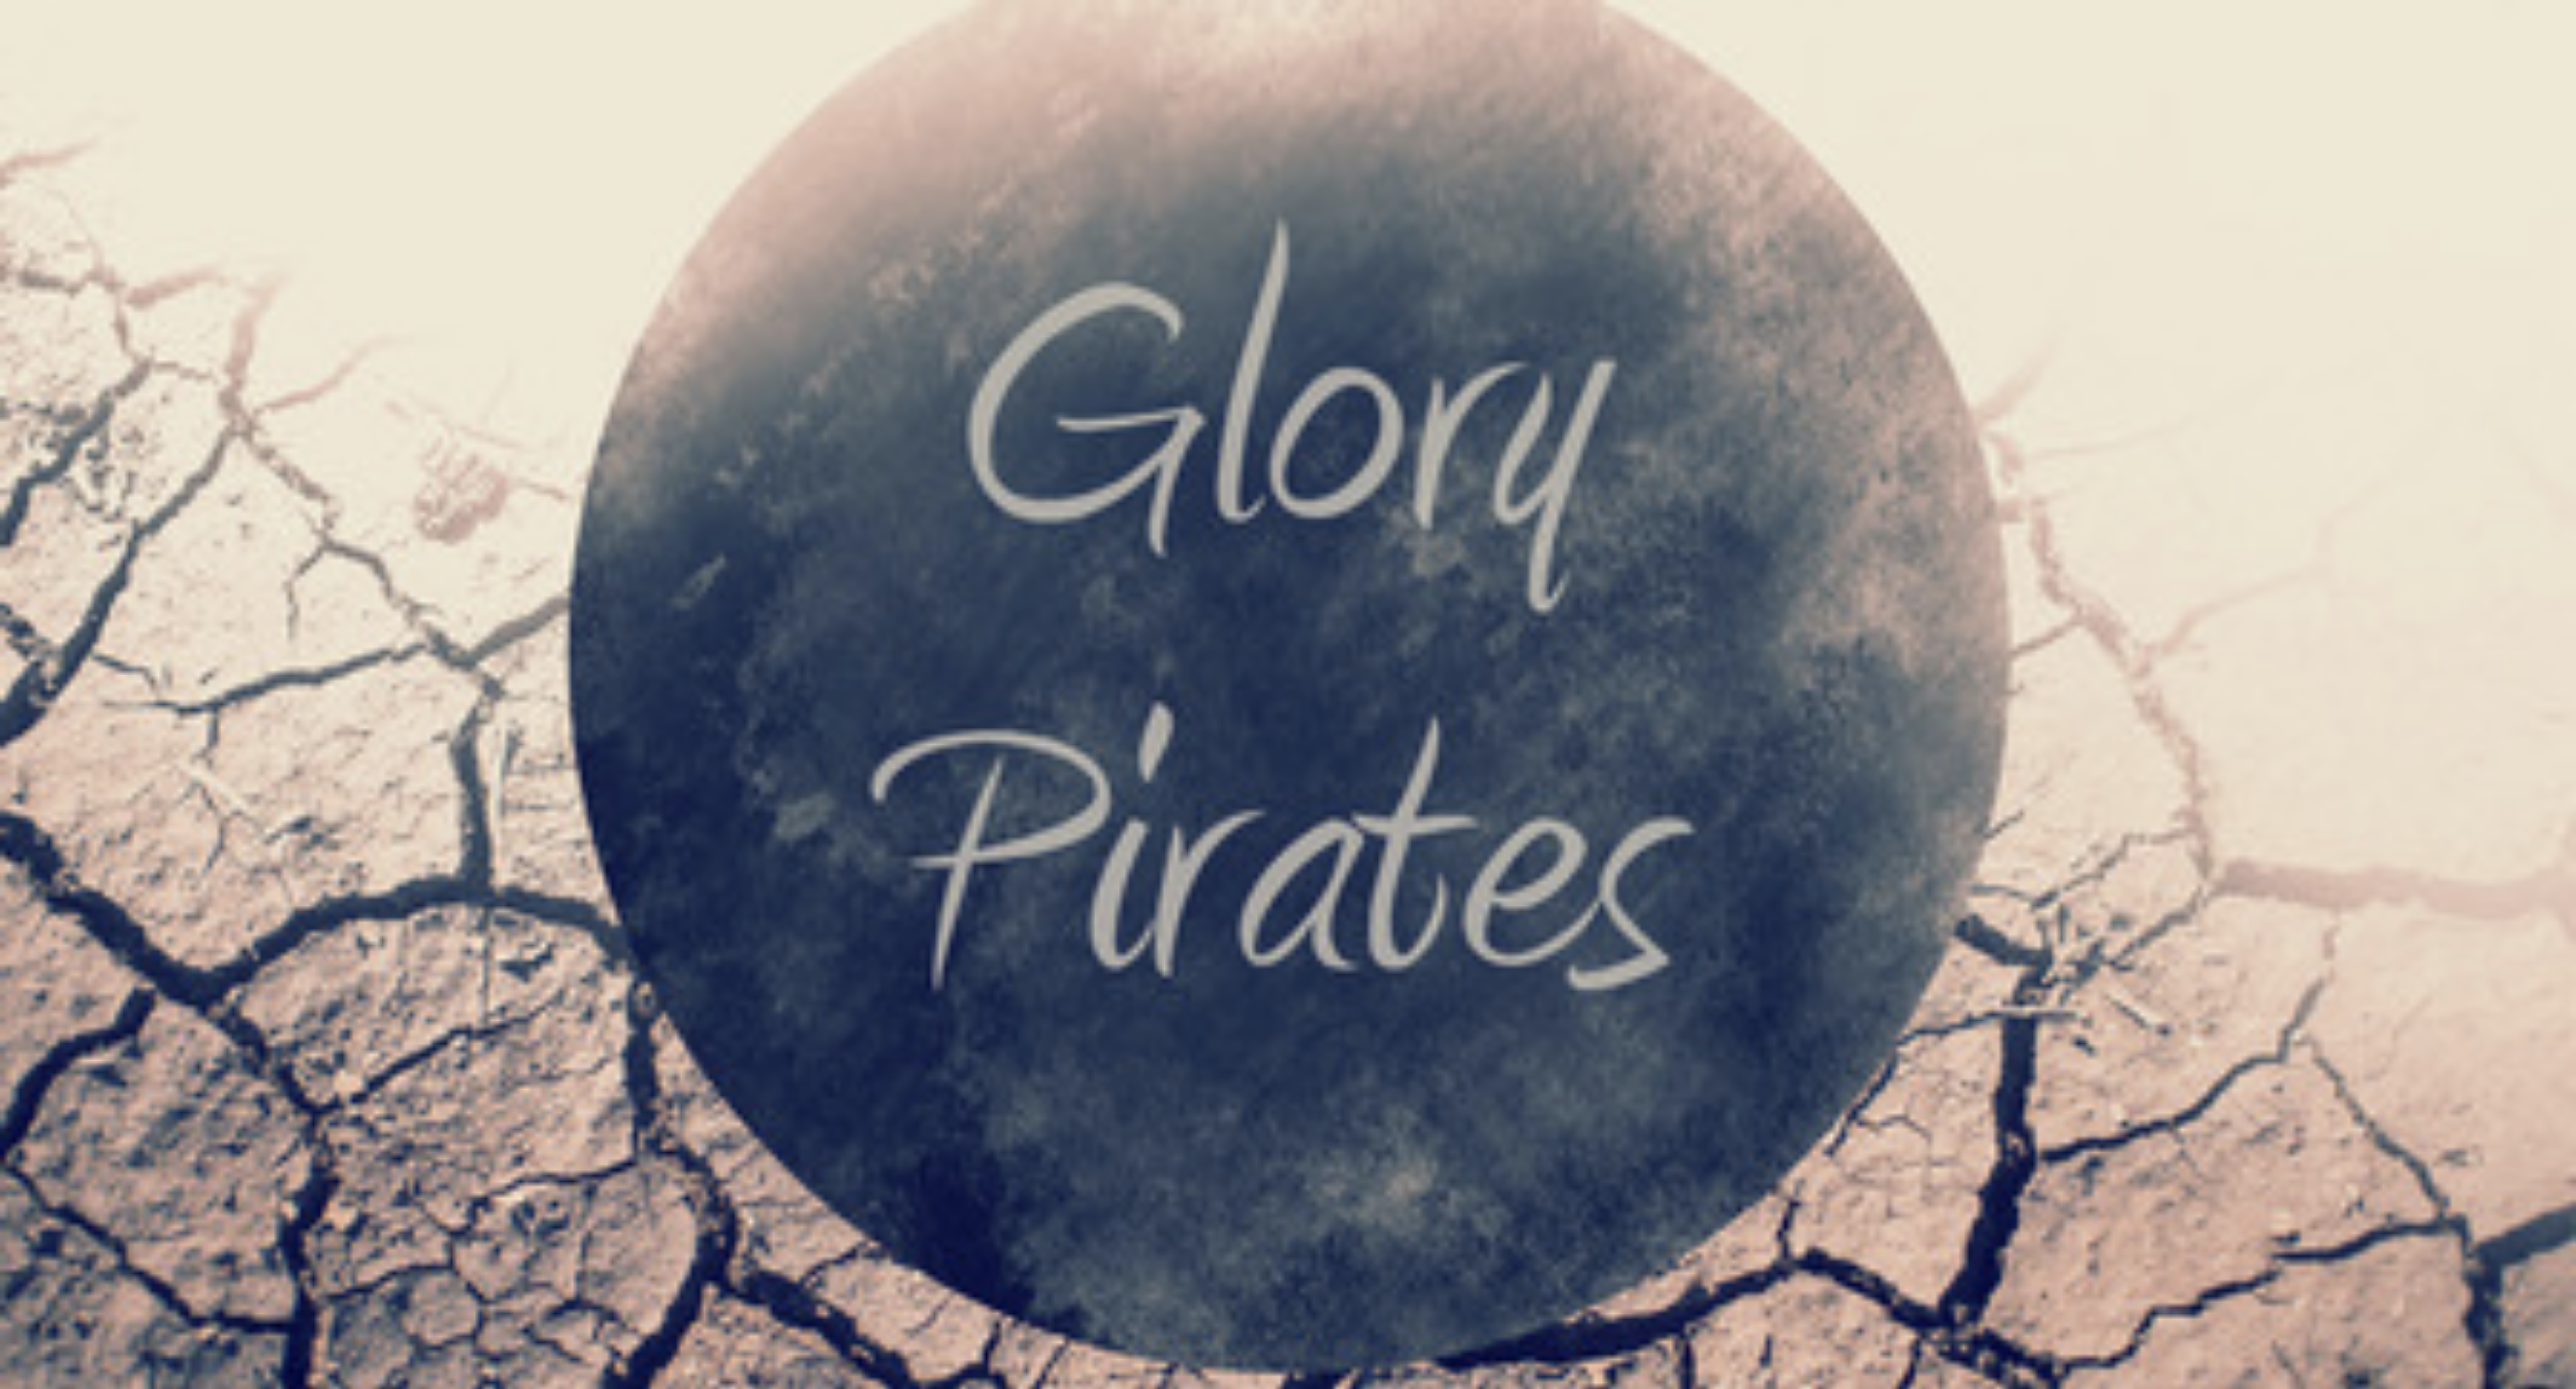 Glory Pirates Pt. 2